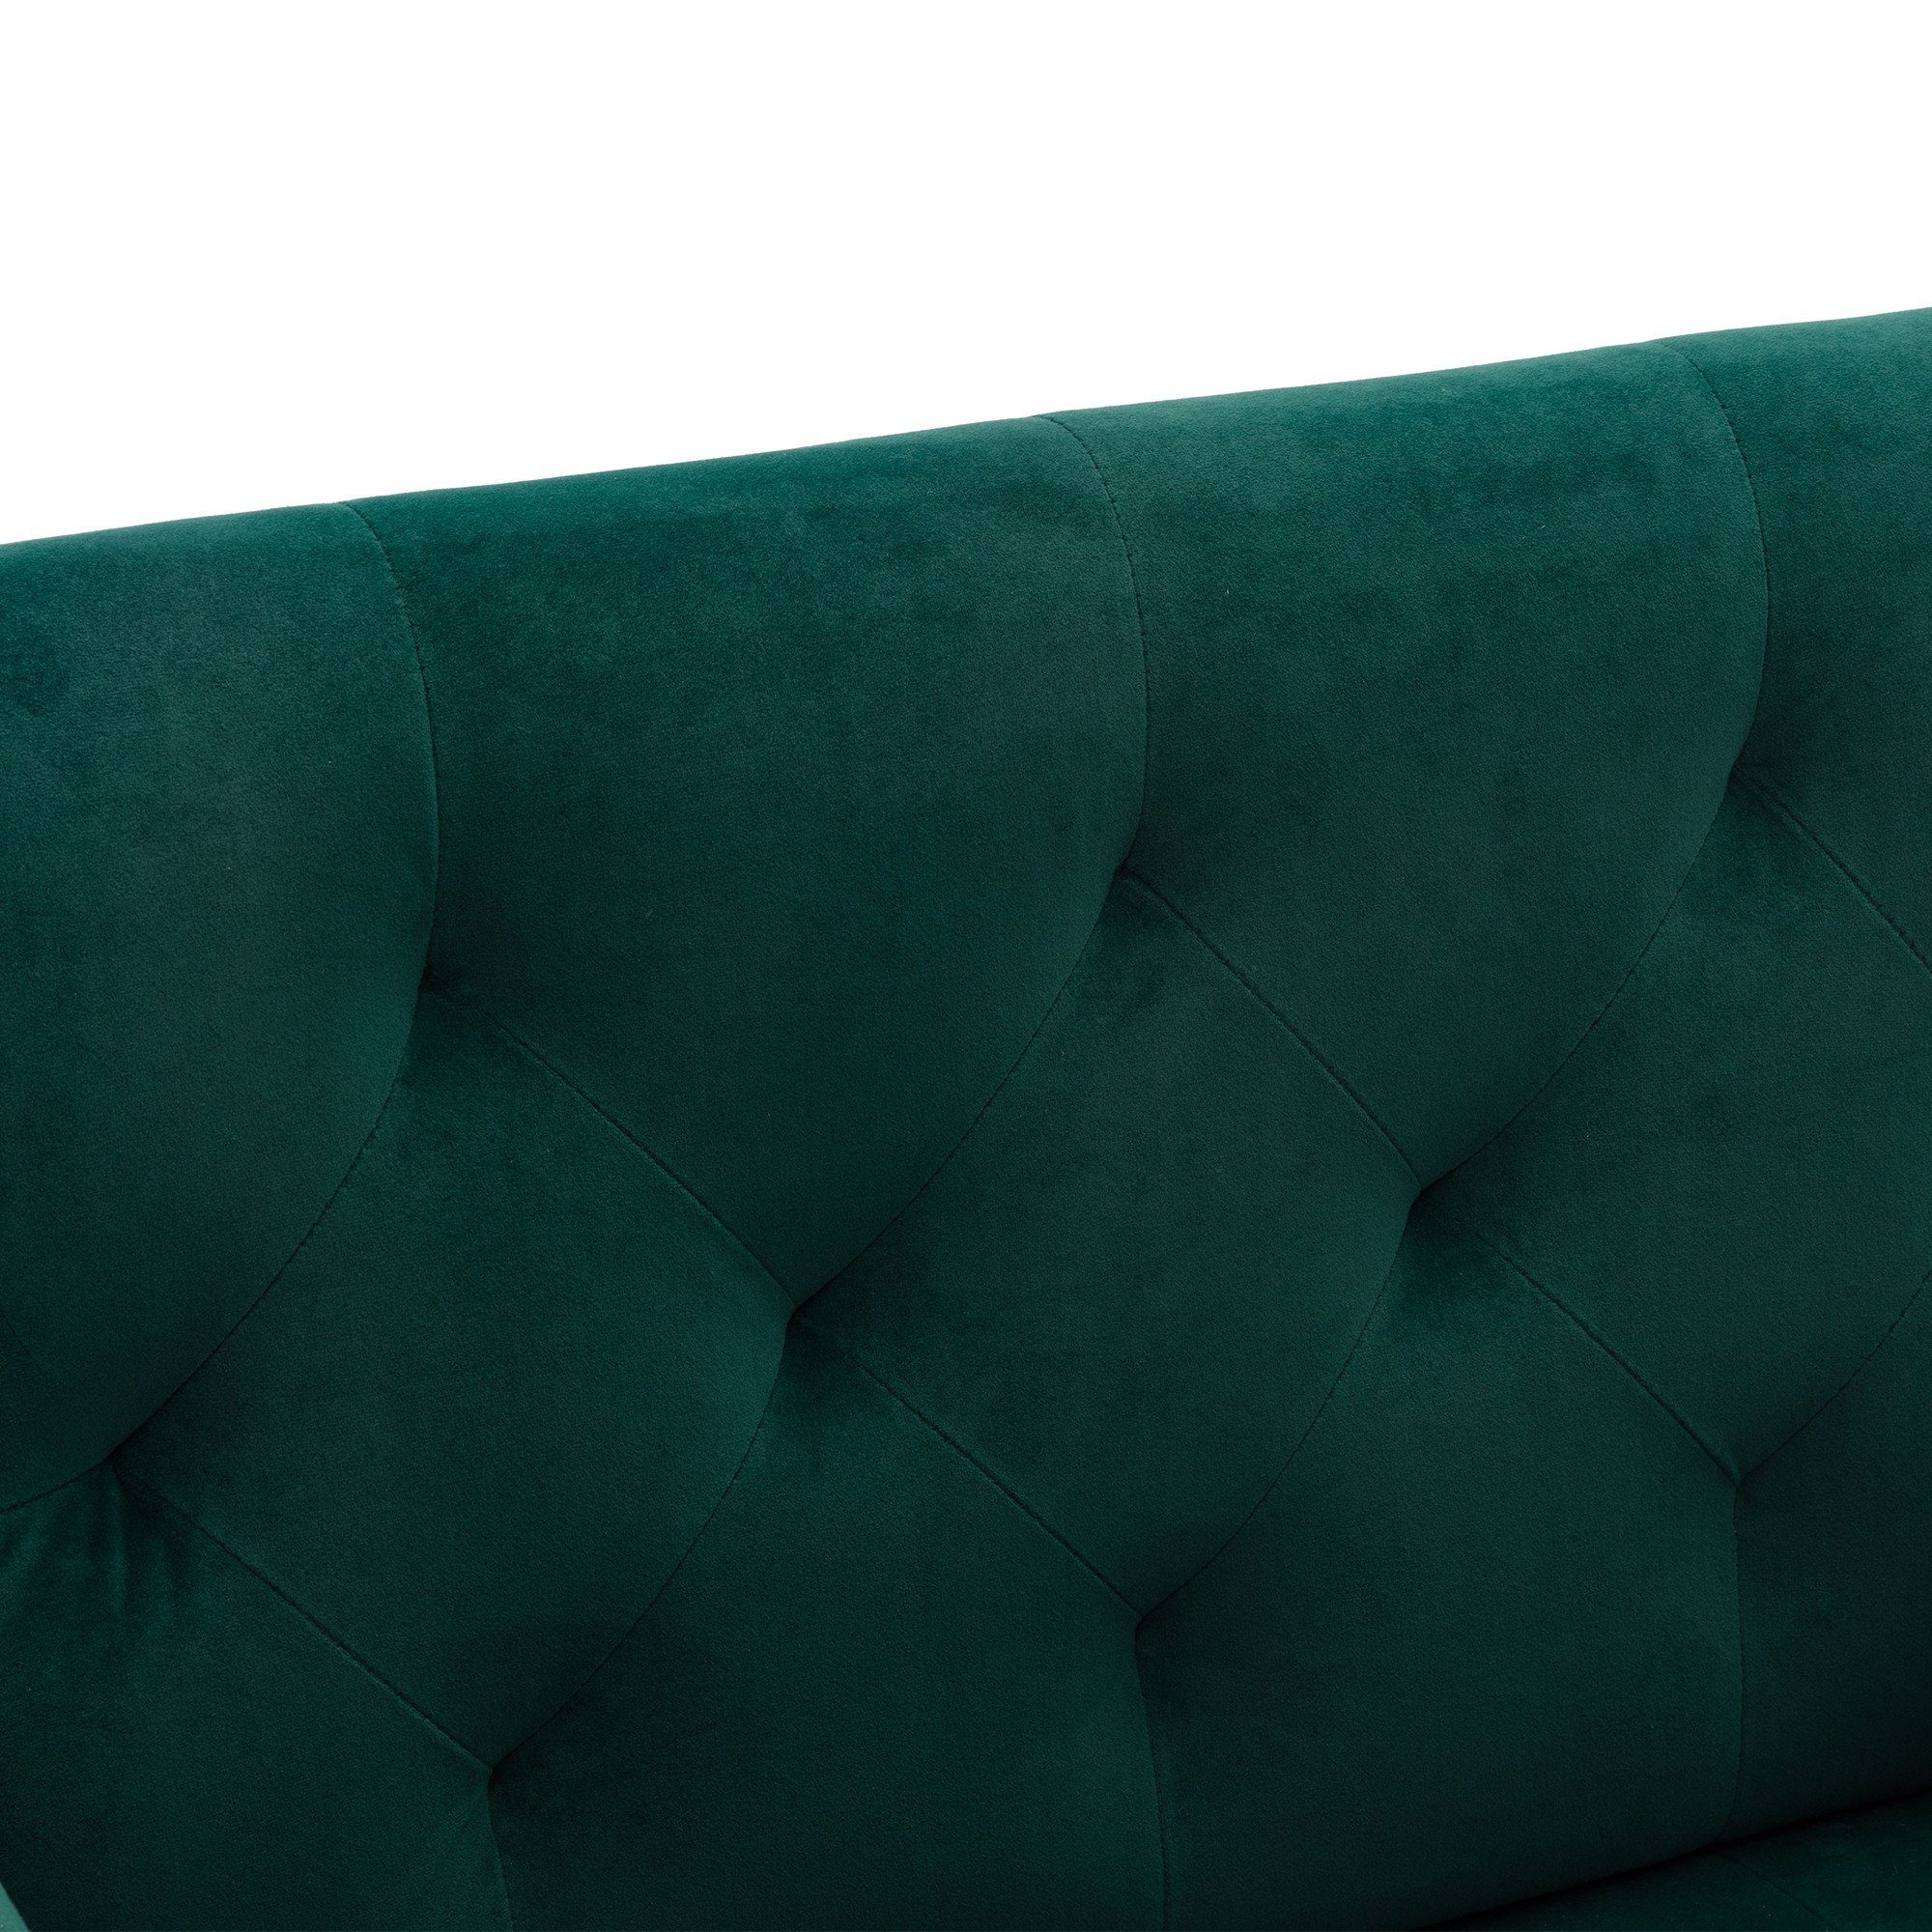 Einzelsofa mehrfarbig Einzelsessel gepolstert Loungesessel Odikalo Akzentstuhl Grün Füßen golden